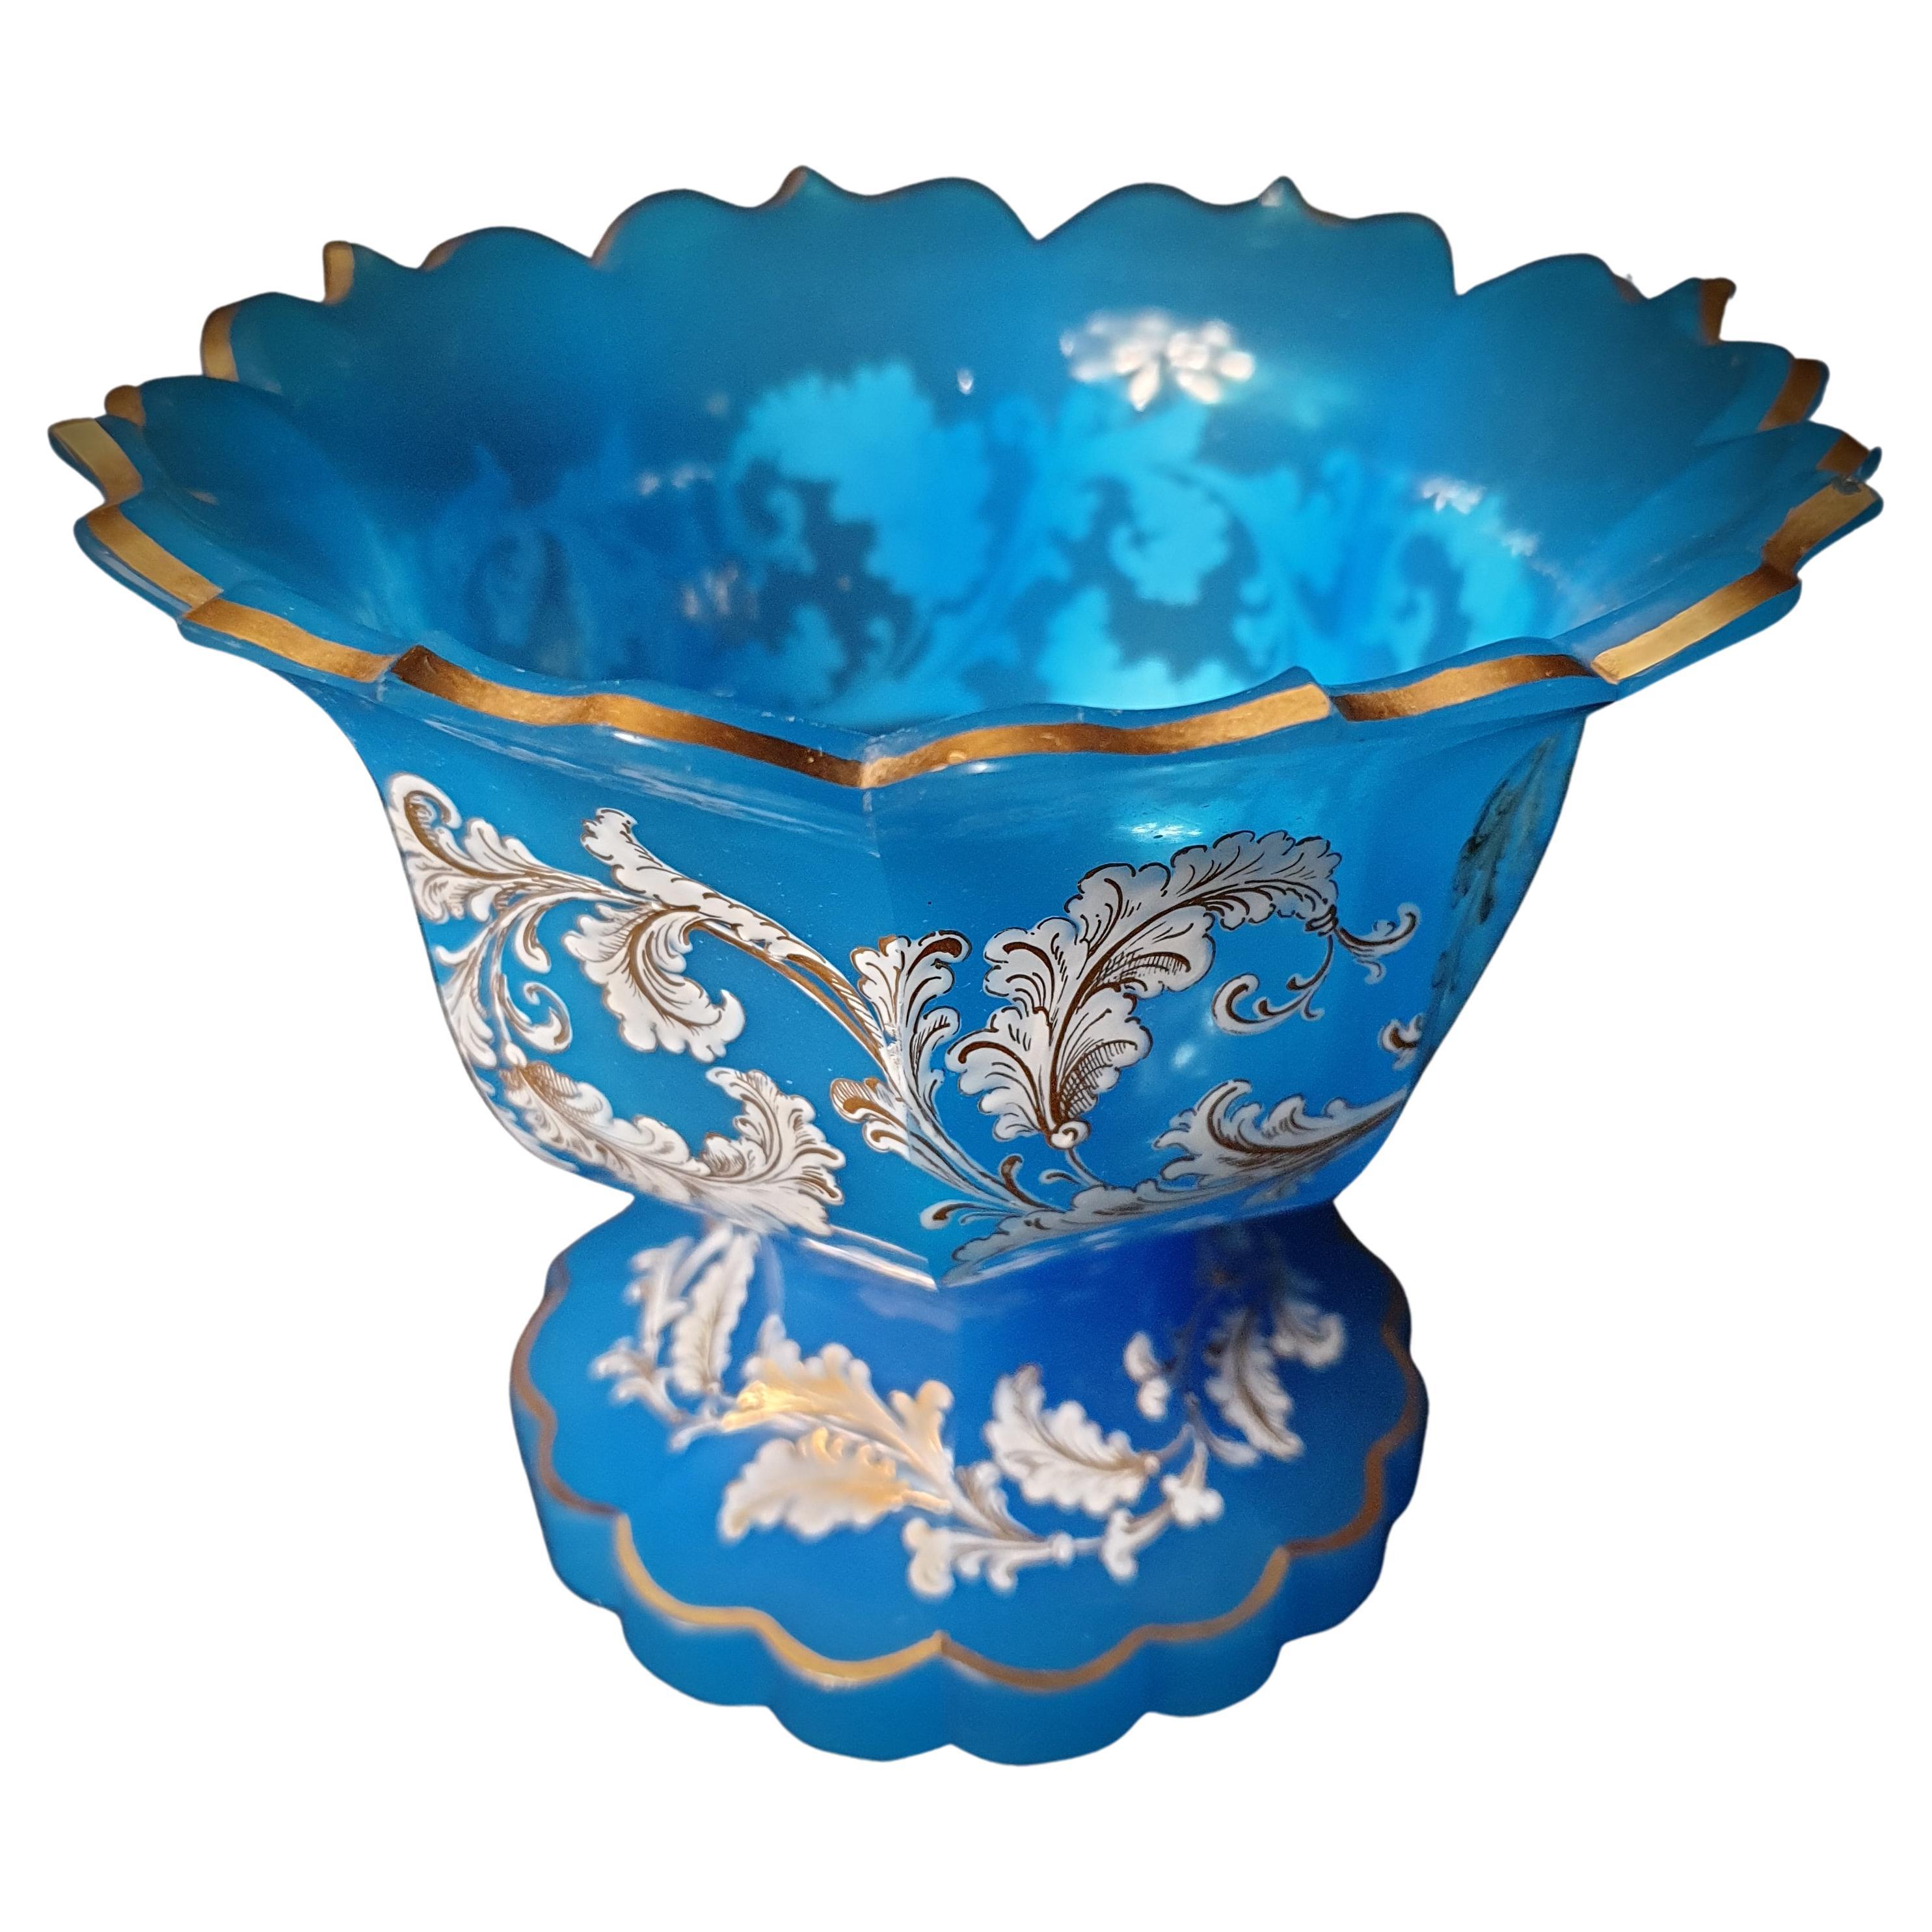 Servierschale aus blauem Moser-Opalglas, blumenförmig, vergoldet und bemalt